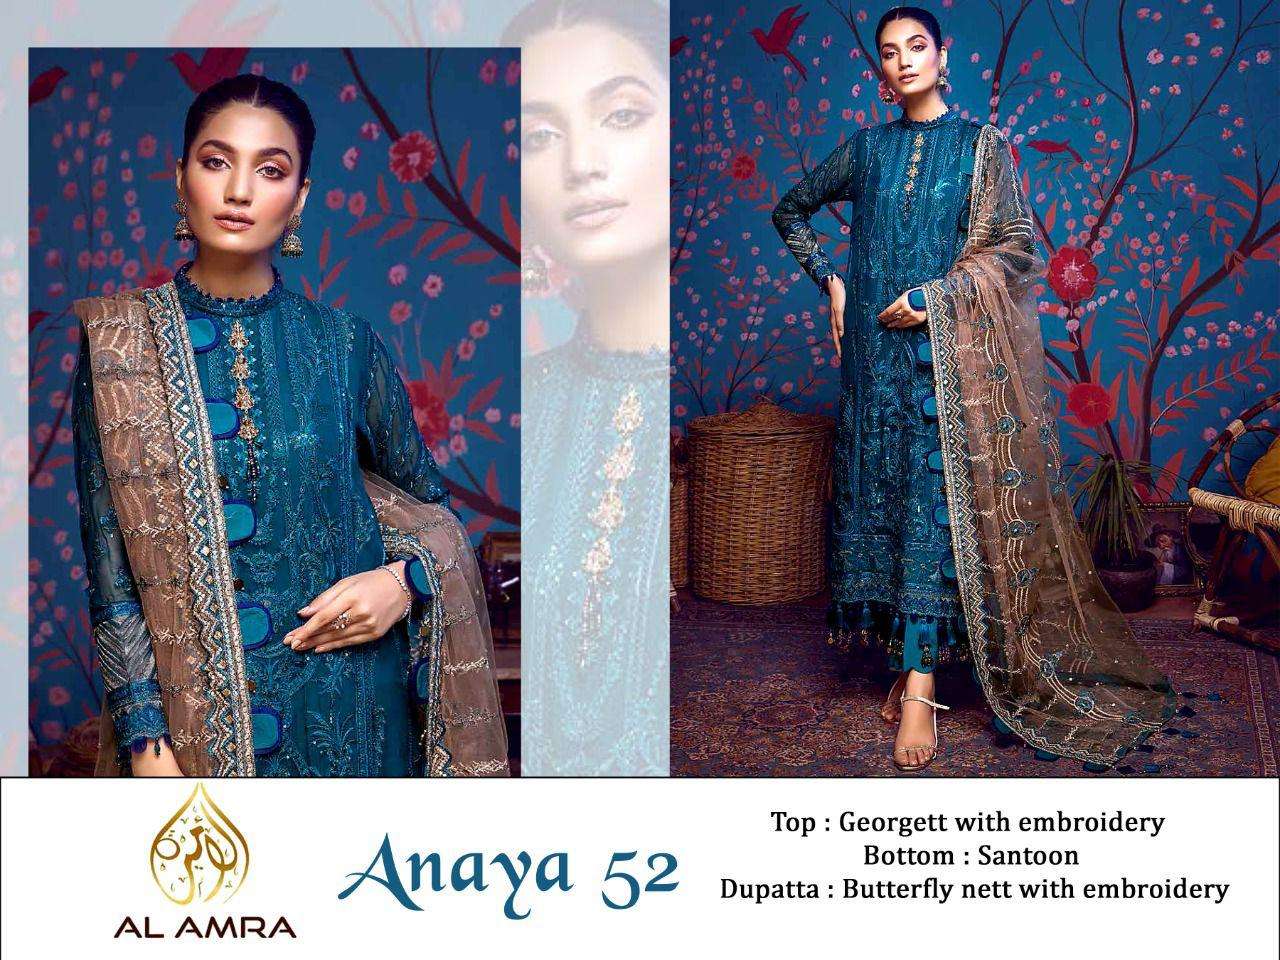 ANAYA ZF 52 BY AL AMRA DESIGNER GEORGETTE EMBROIDERY PAKISTANI DRESS